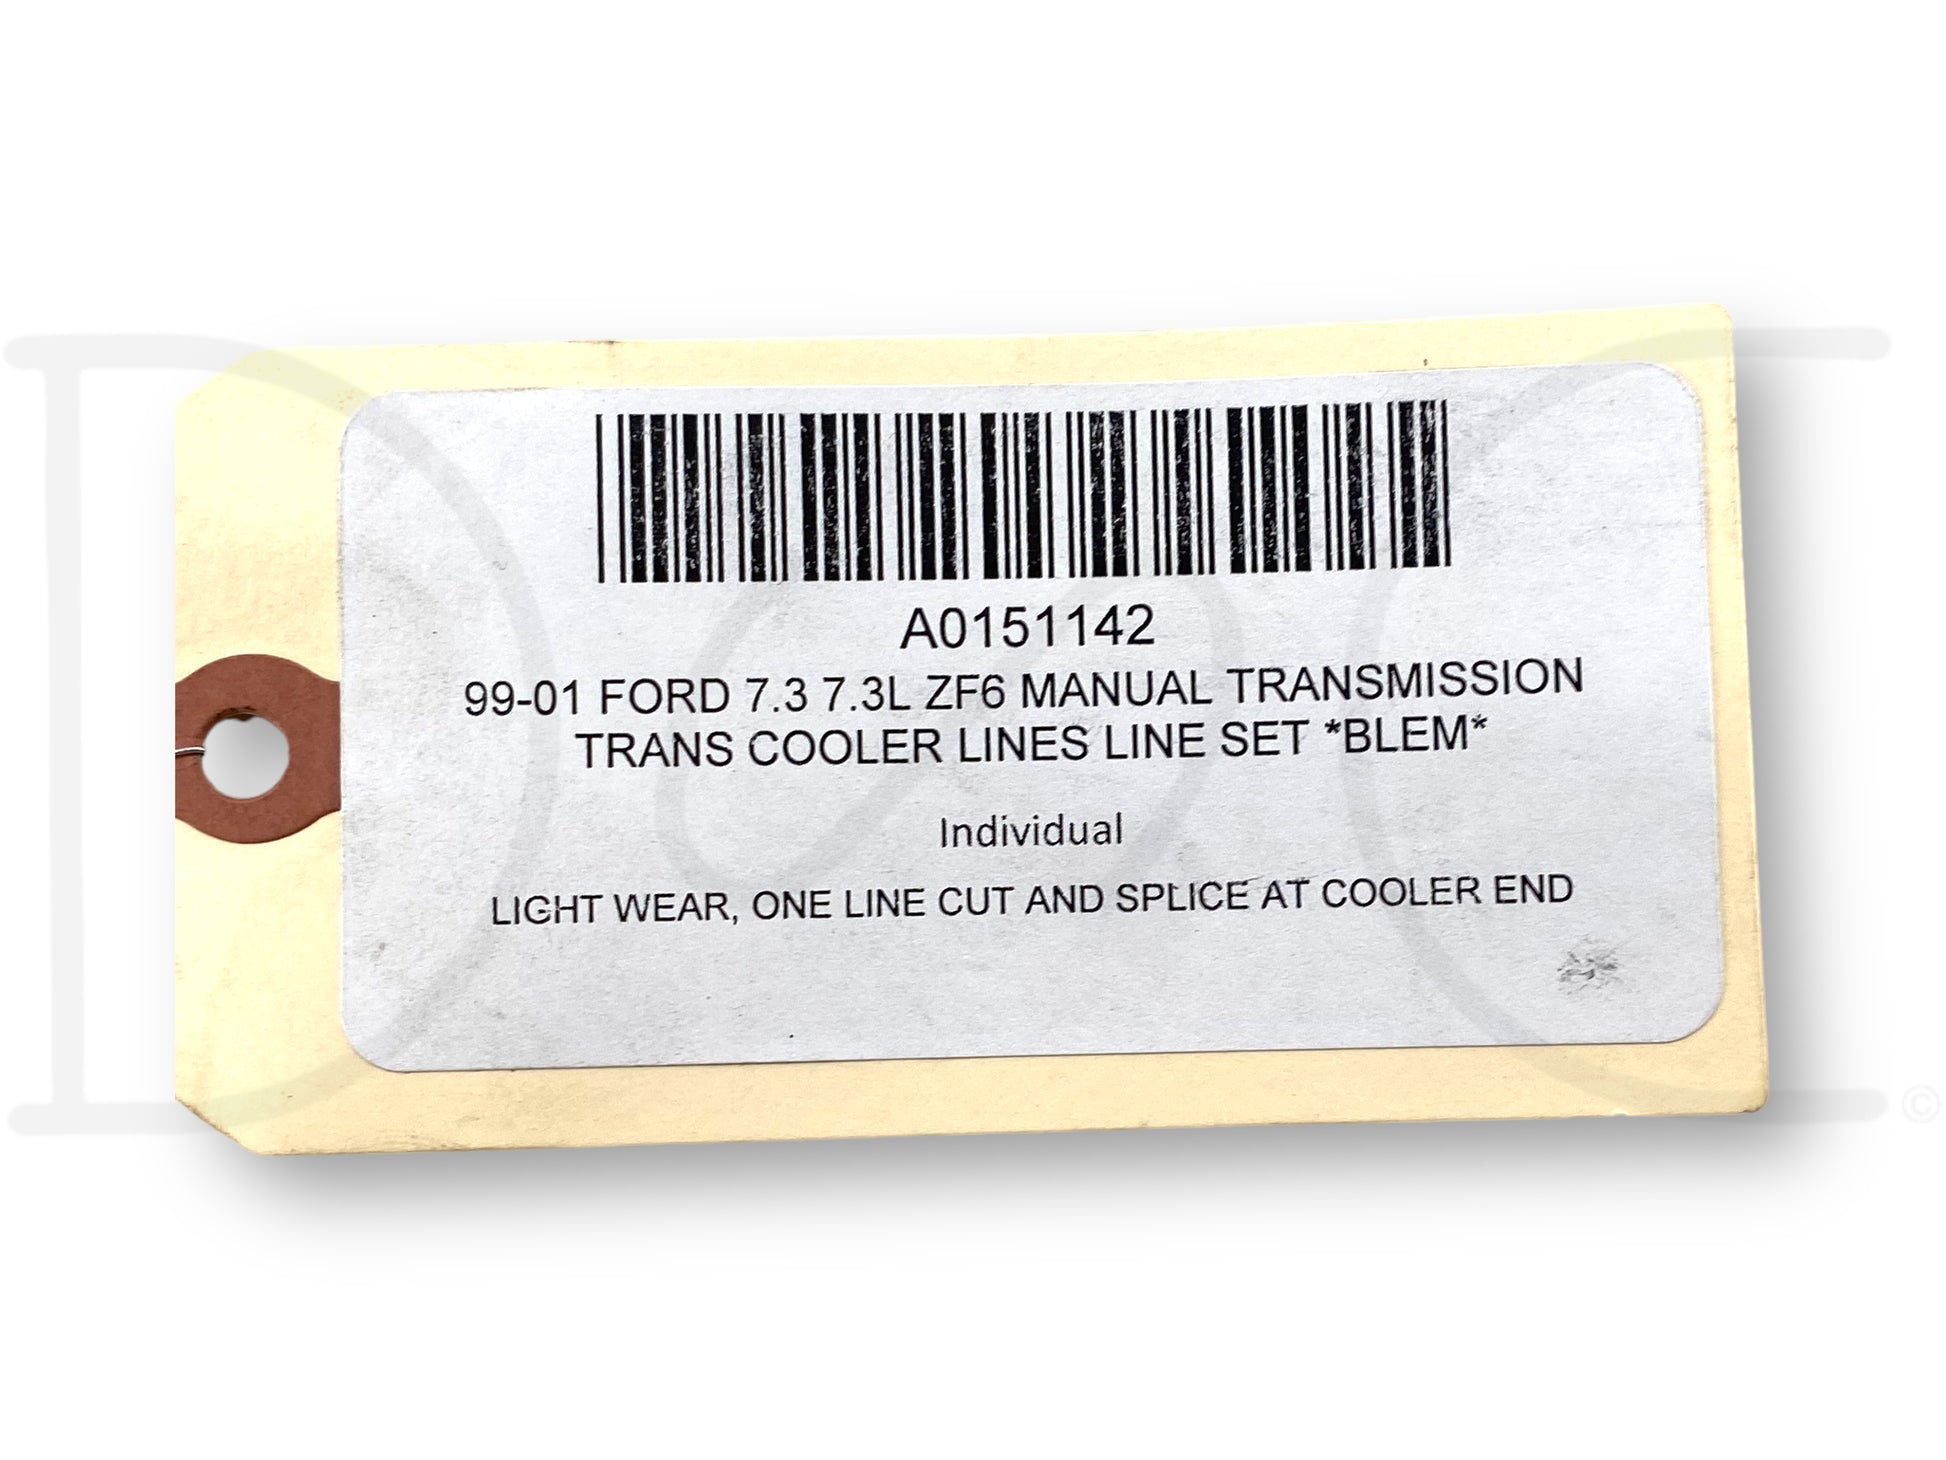 99-01 Ford 7.3 7.3L ZF6 MANUAL TRANSMISSION TRANS COOLER LINES